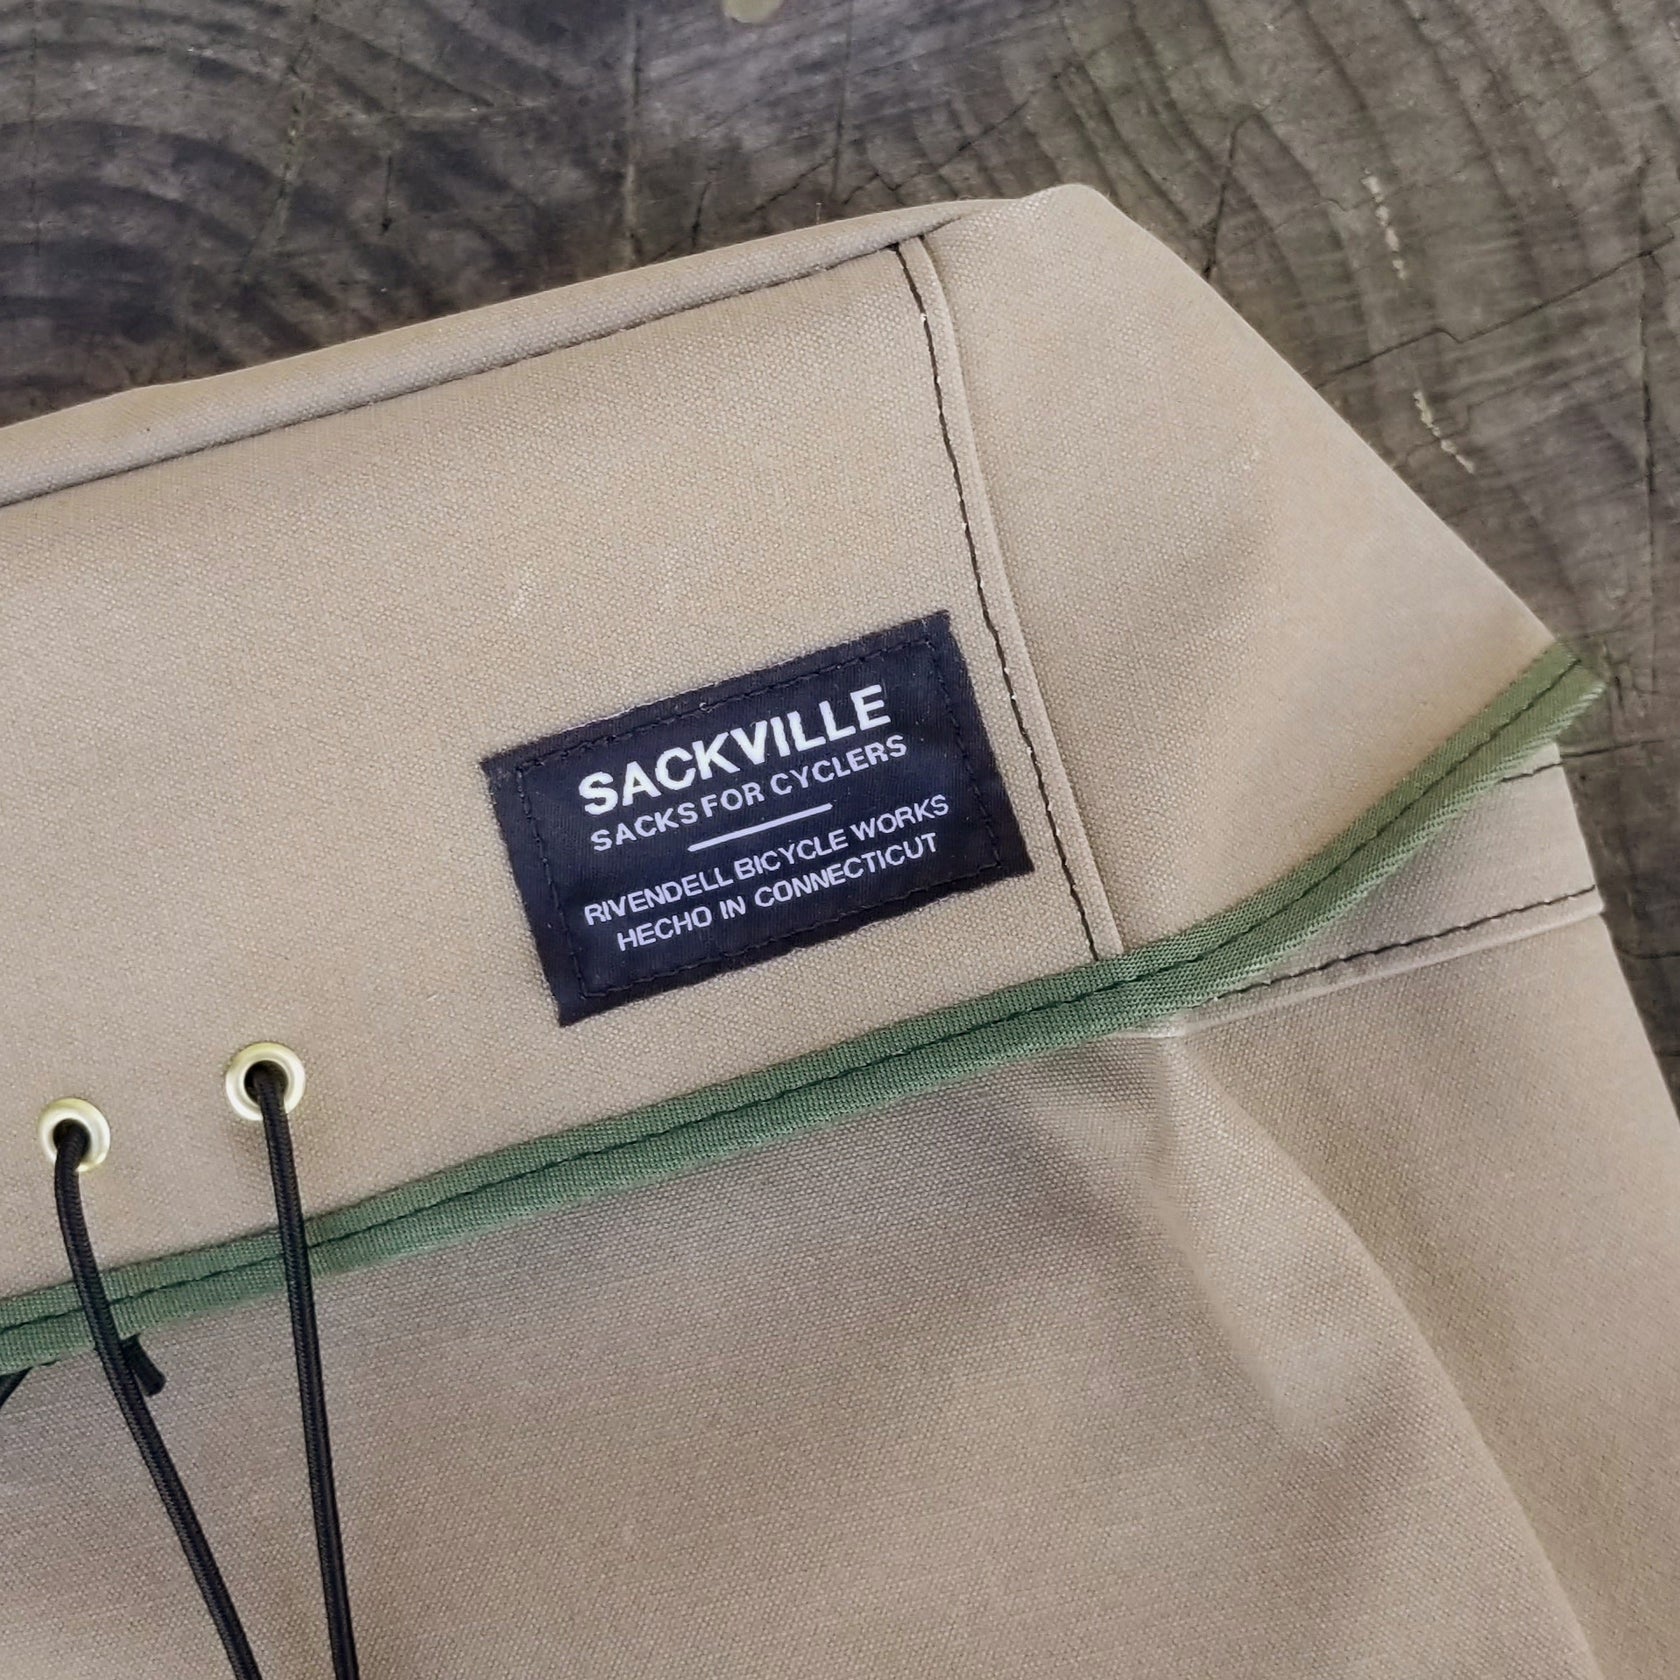 Sackville Backabike Bag, each – Rivendell Bicycle Works